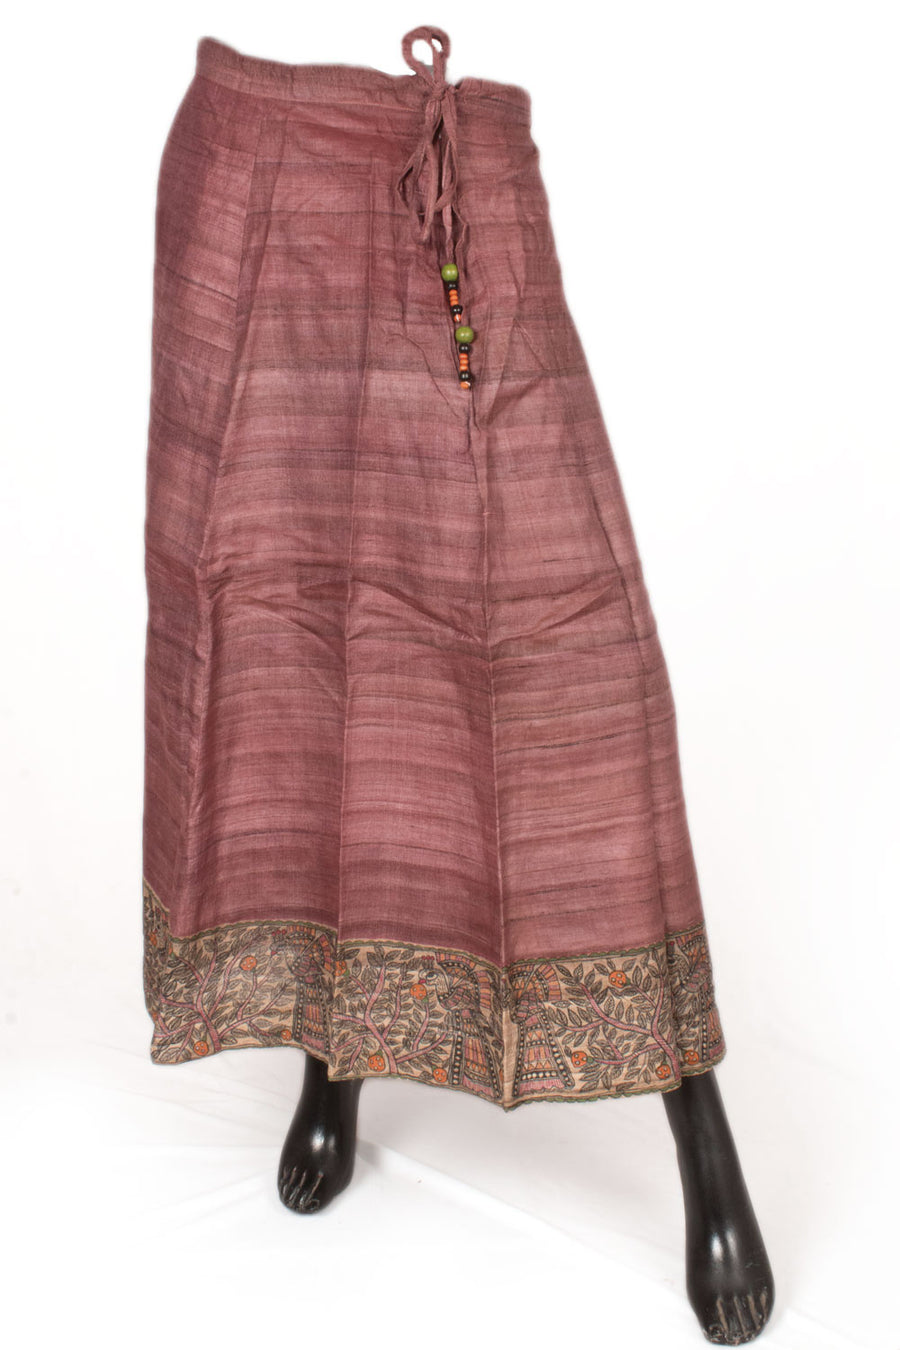 Hand Painted Madhubani Bhagalpur Tussar Silk Skirt with Peacock Motifs